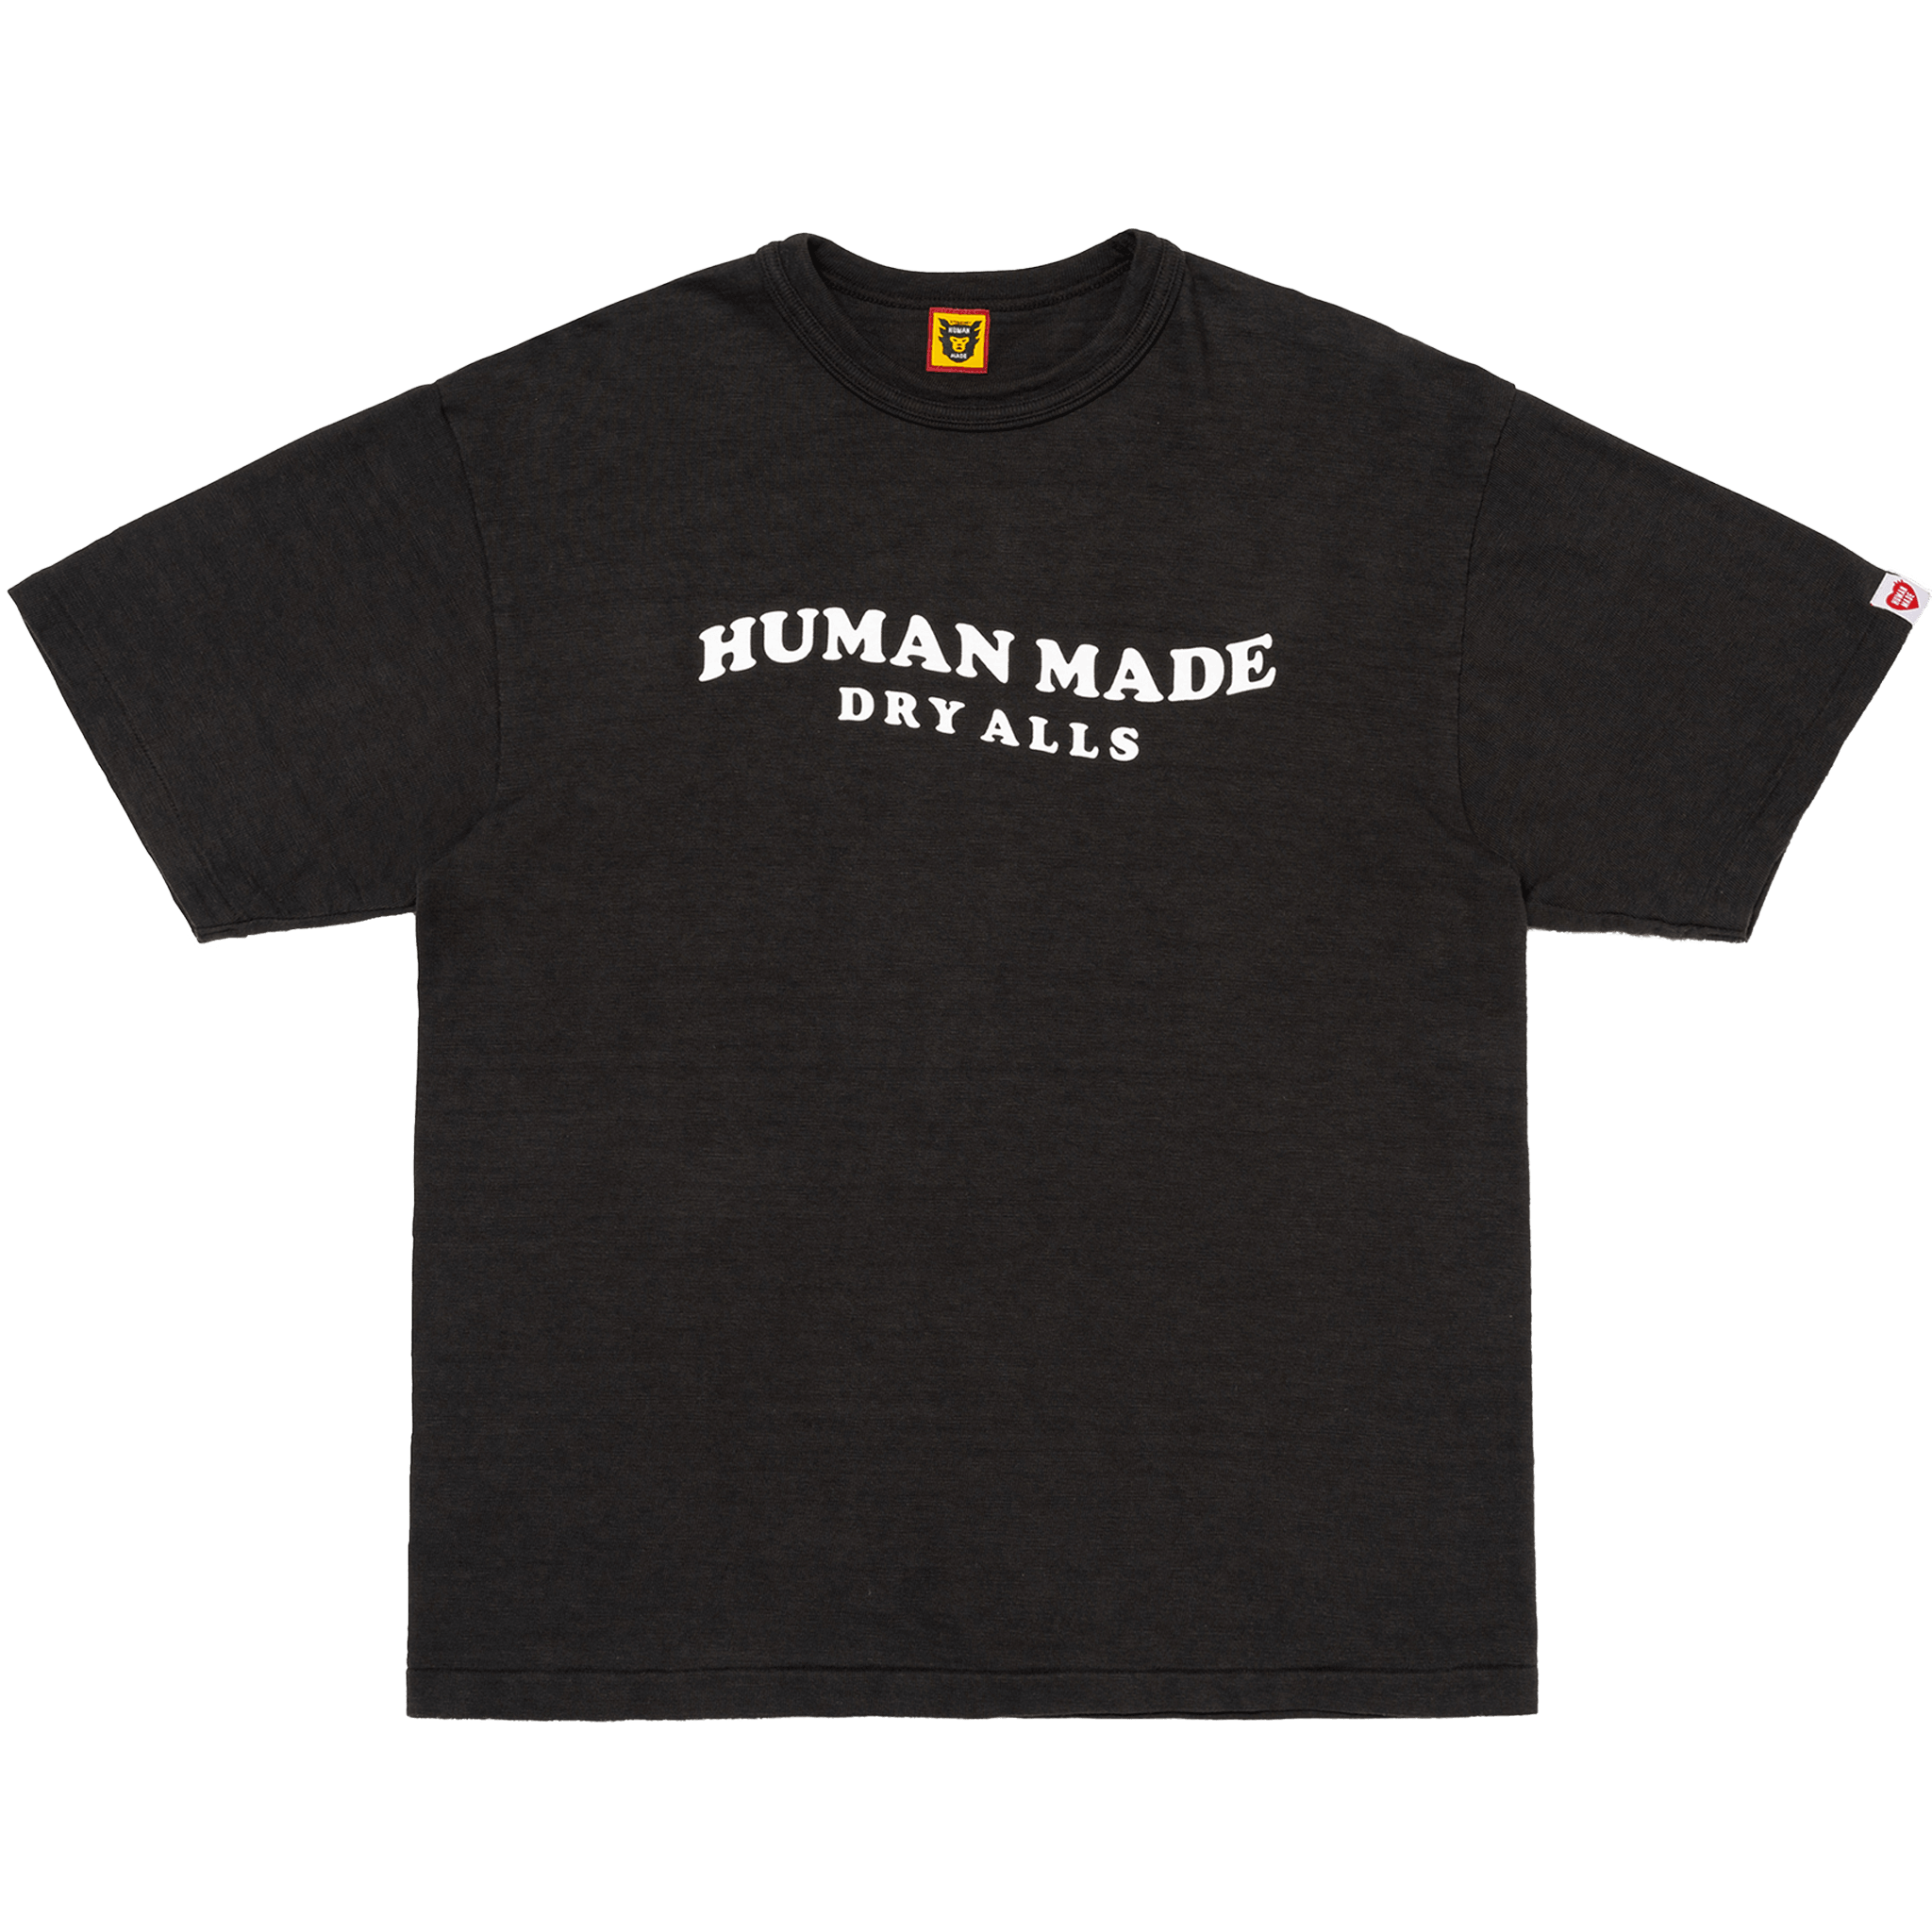 Human Made | T-Shirts, Jackets & Collectibles – Billionaire Boys Club